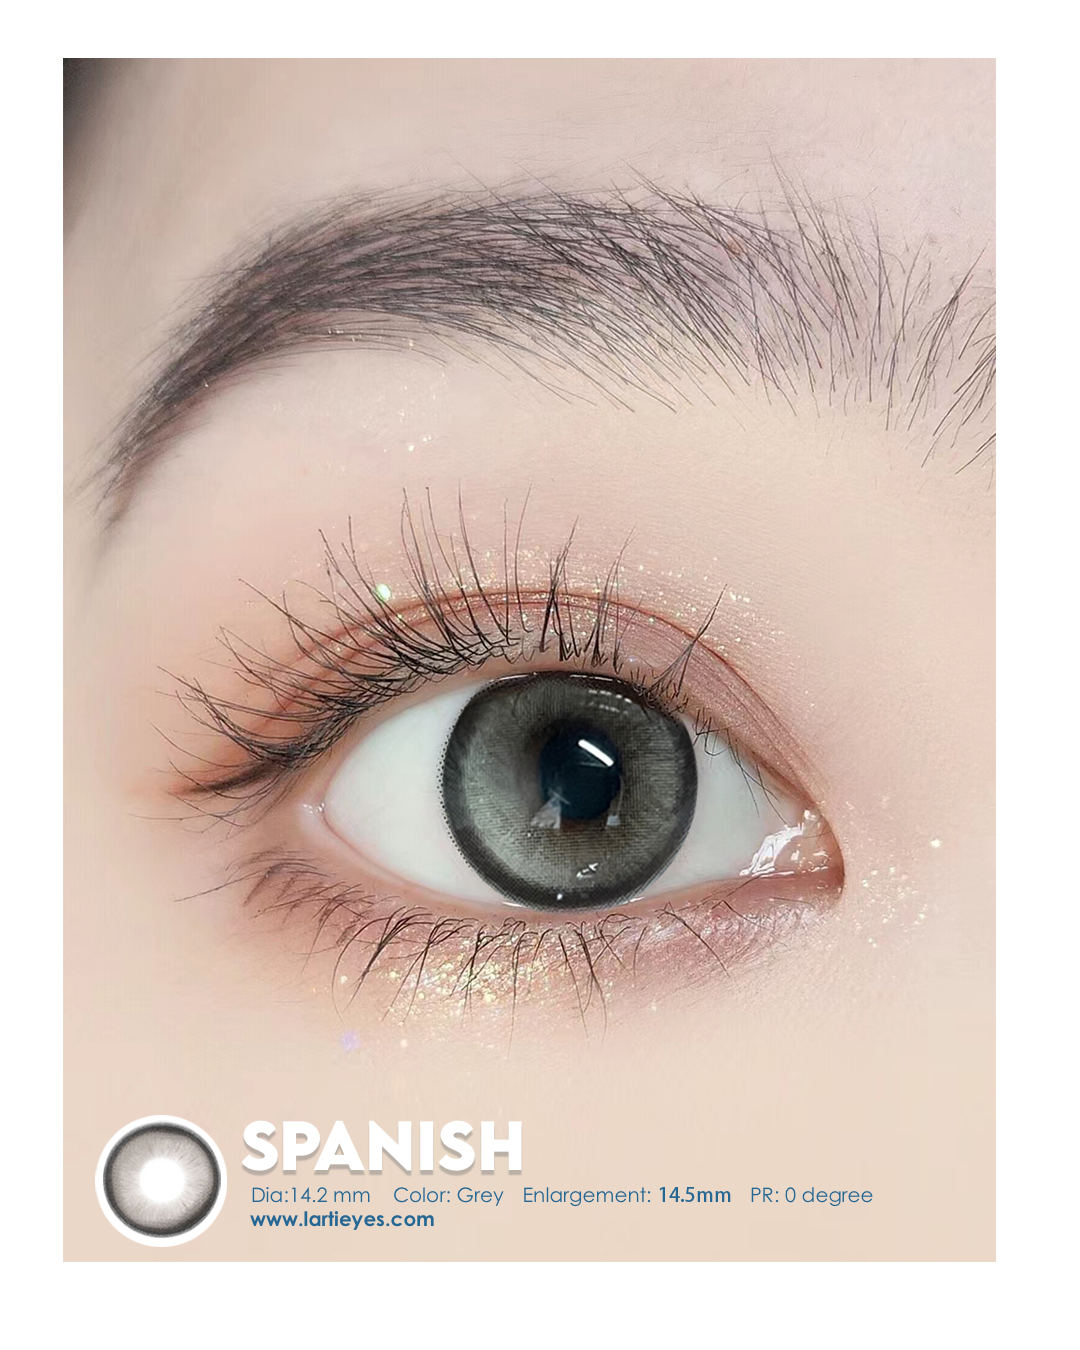 Spanish focus eyes